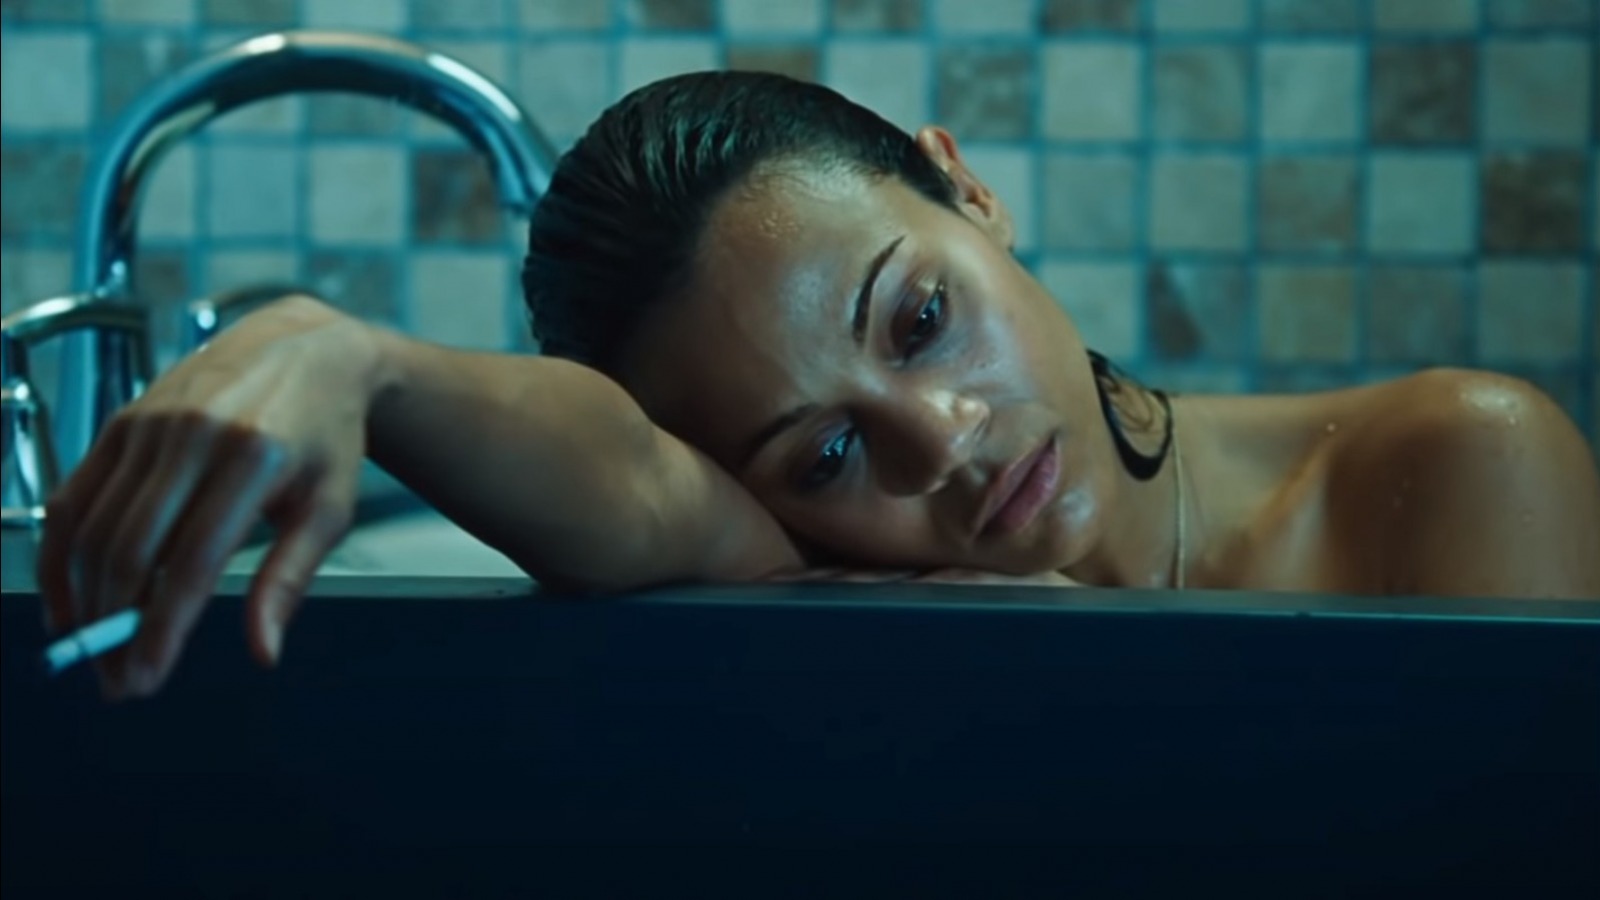 The Zoe Saldana Action Thriller That's Heating Up On Netflix.